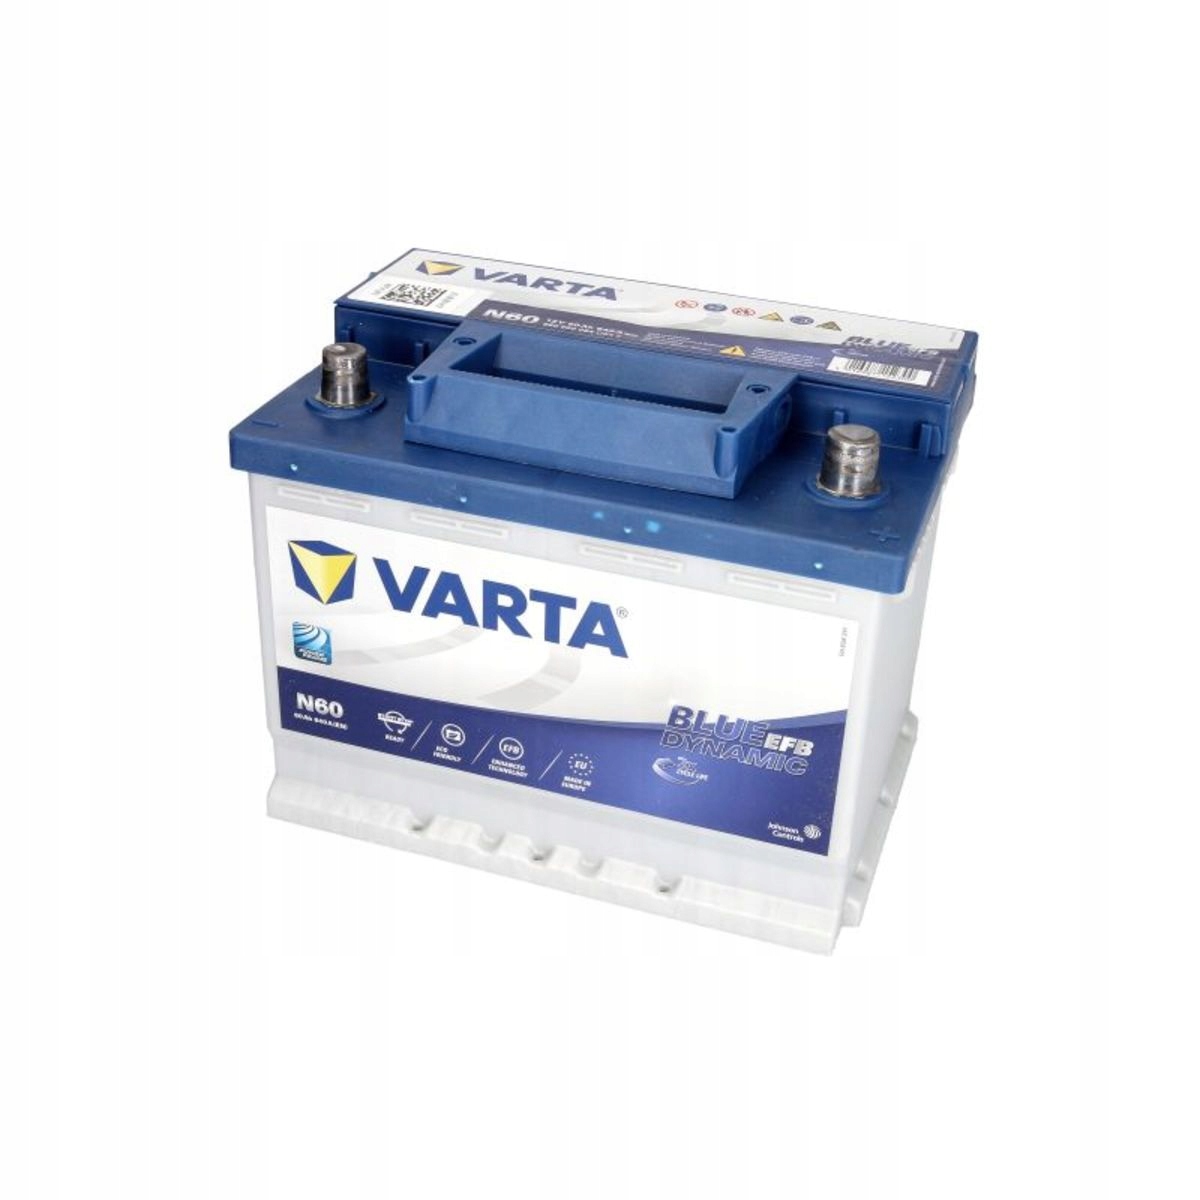 560500064D842 VARTA N60 BLUE dynamic EFB N60 Batterie 12V 60Ah 640A B13  Batterie EFB